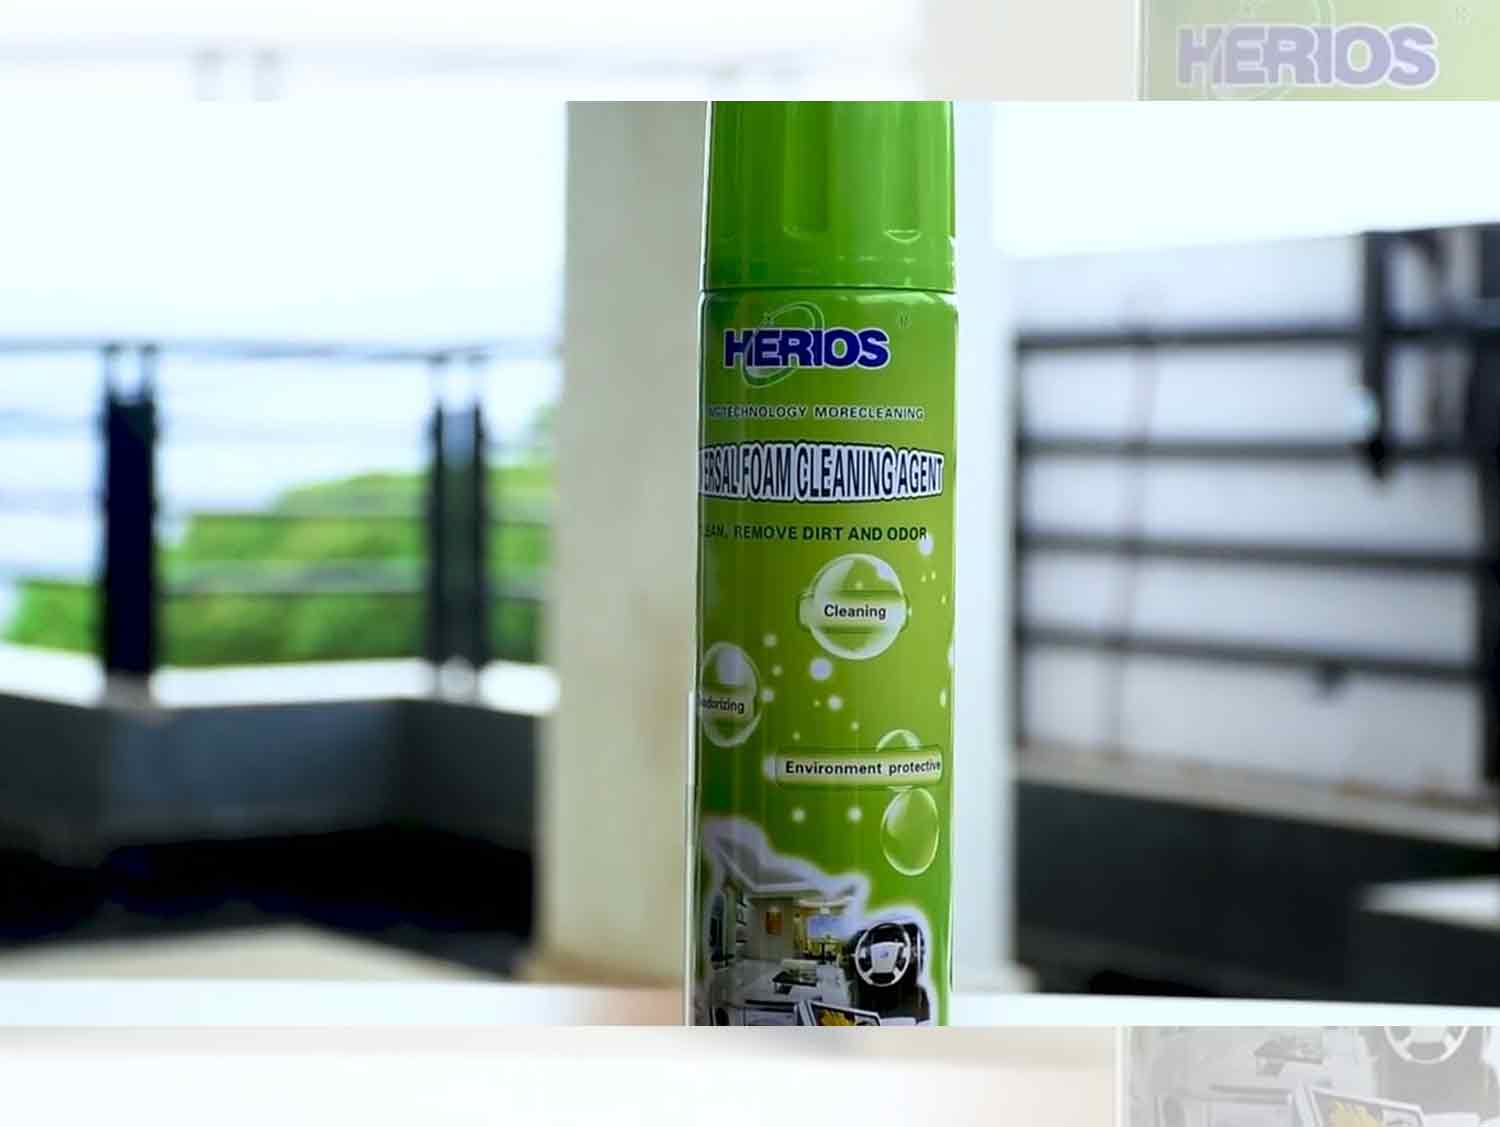 Herios Foam Cleaner 650ml bottle against a clean backdrop